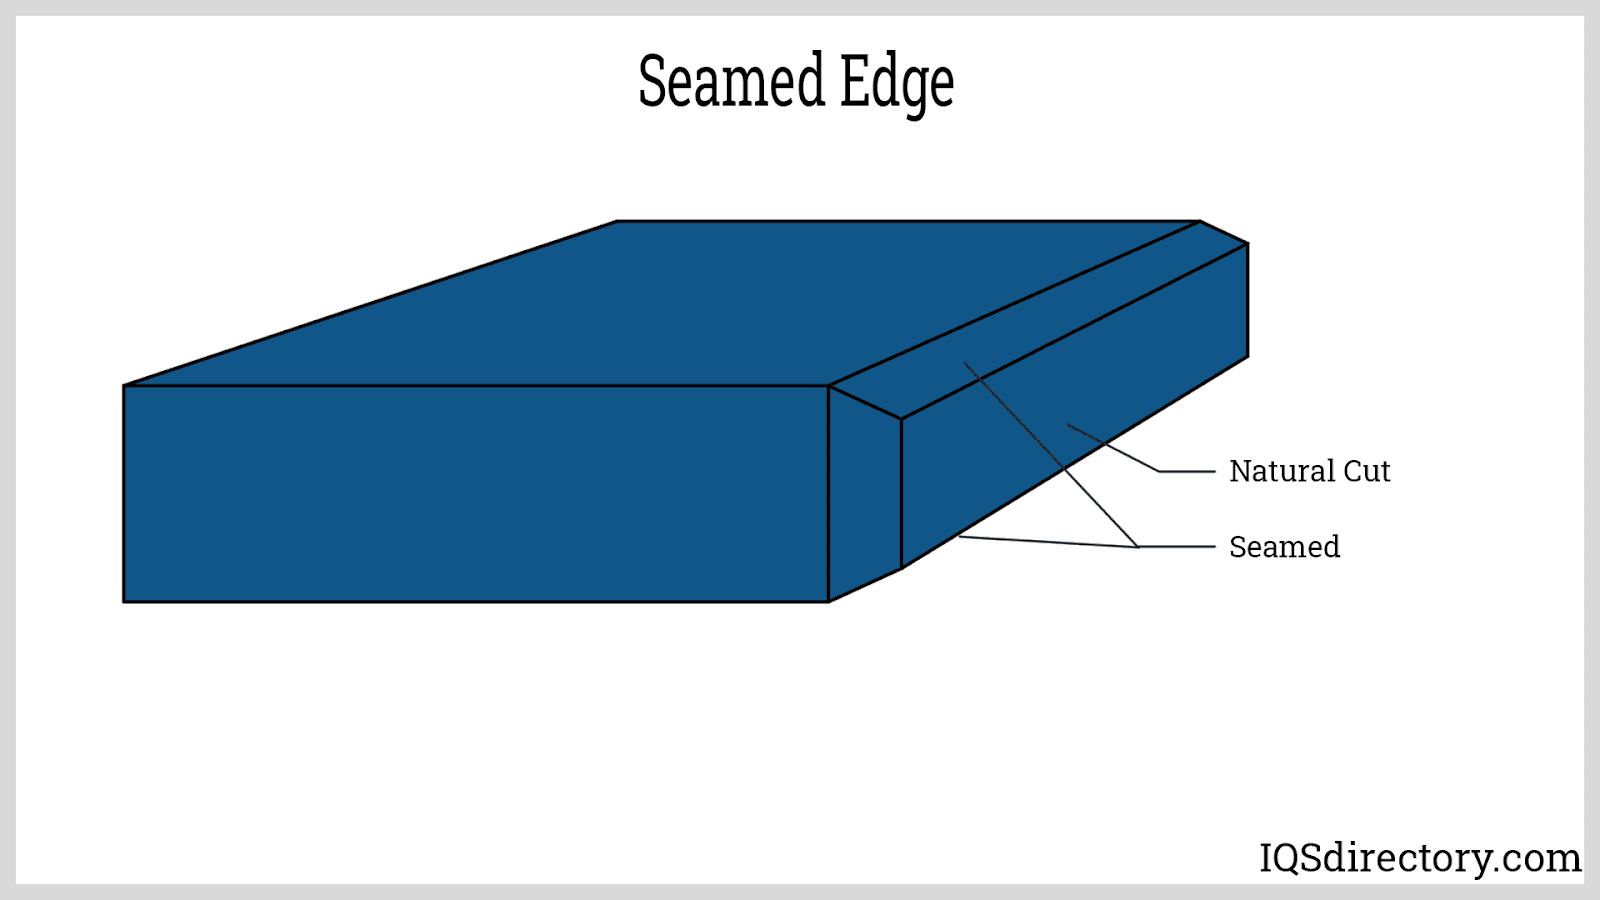 Seamed Edge